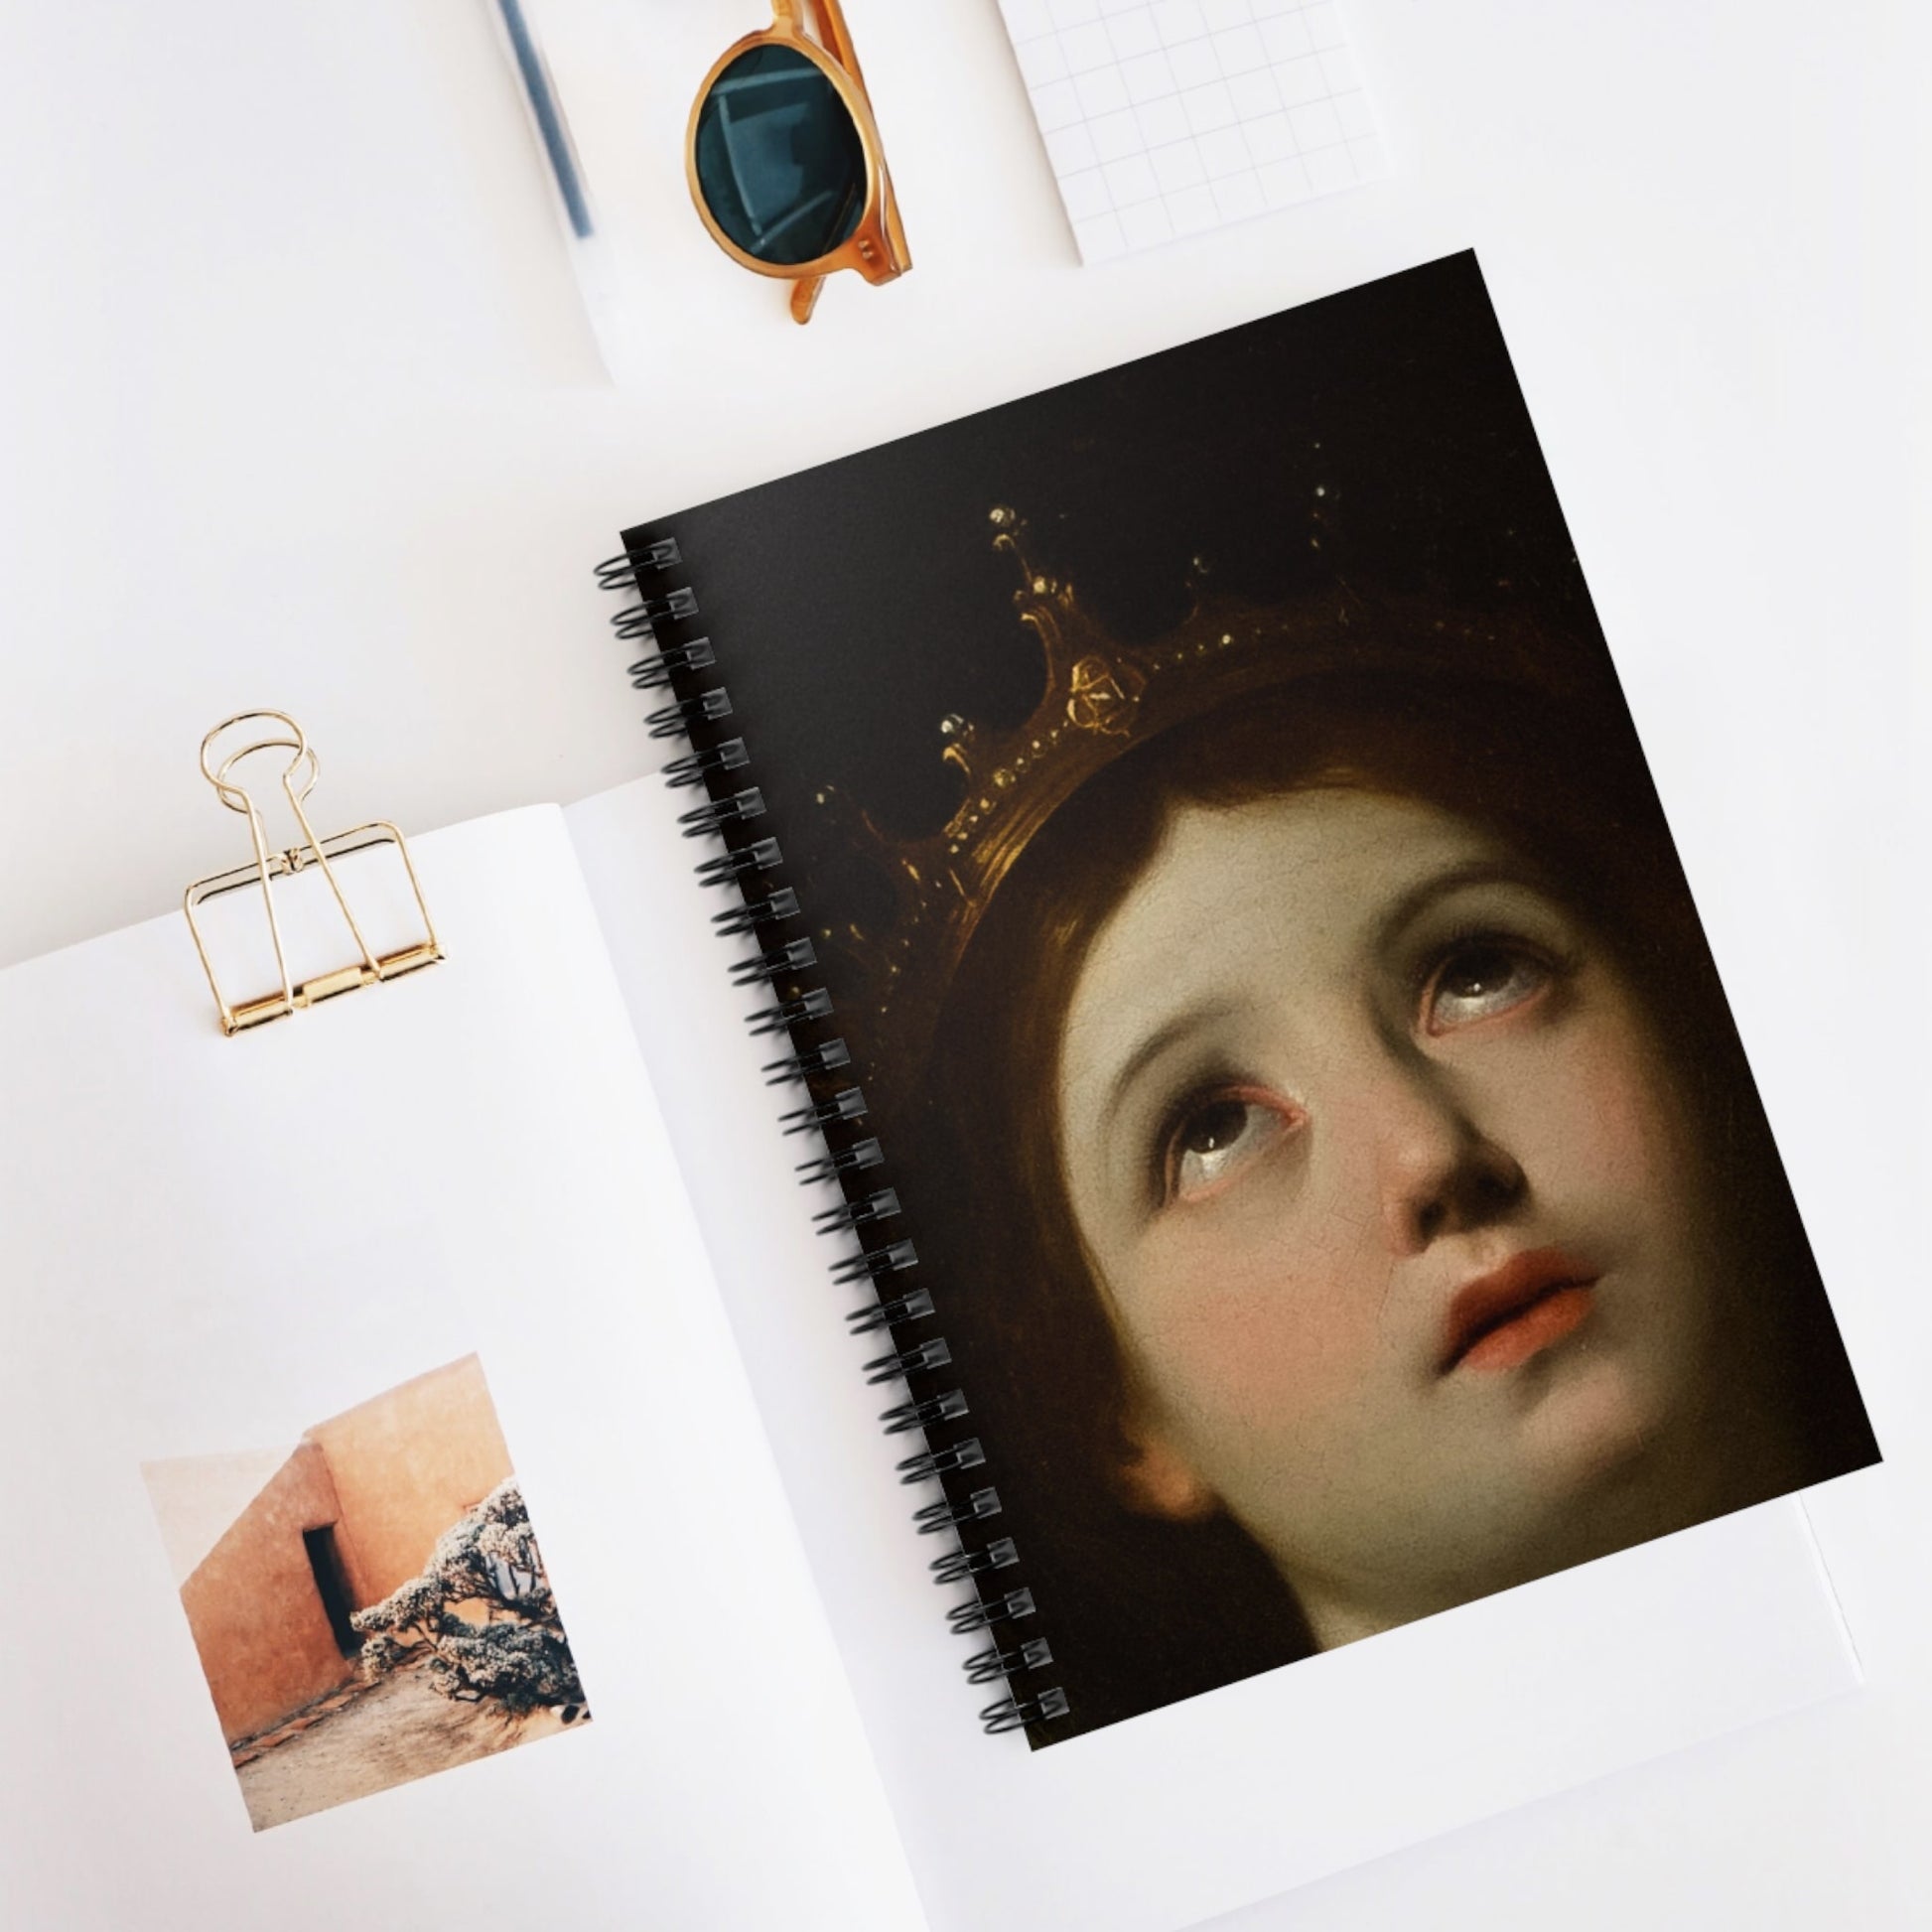 Renaissance Spiral Notebook Displayed on Desk